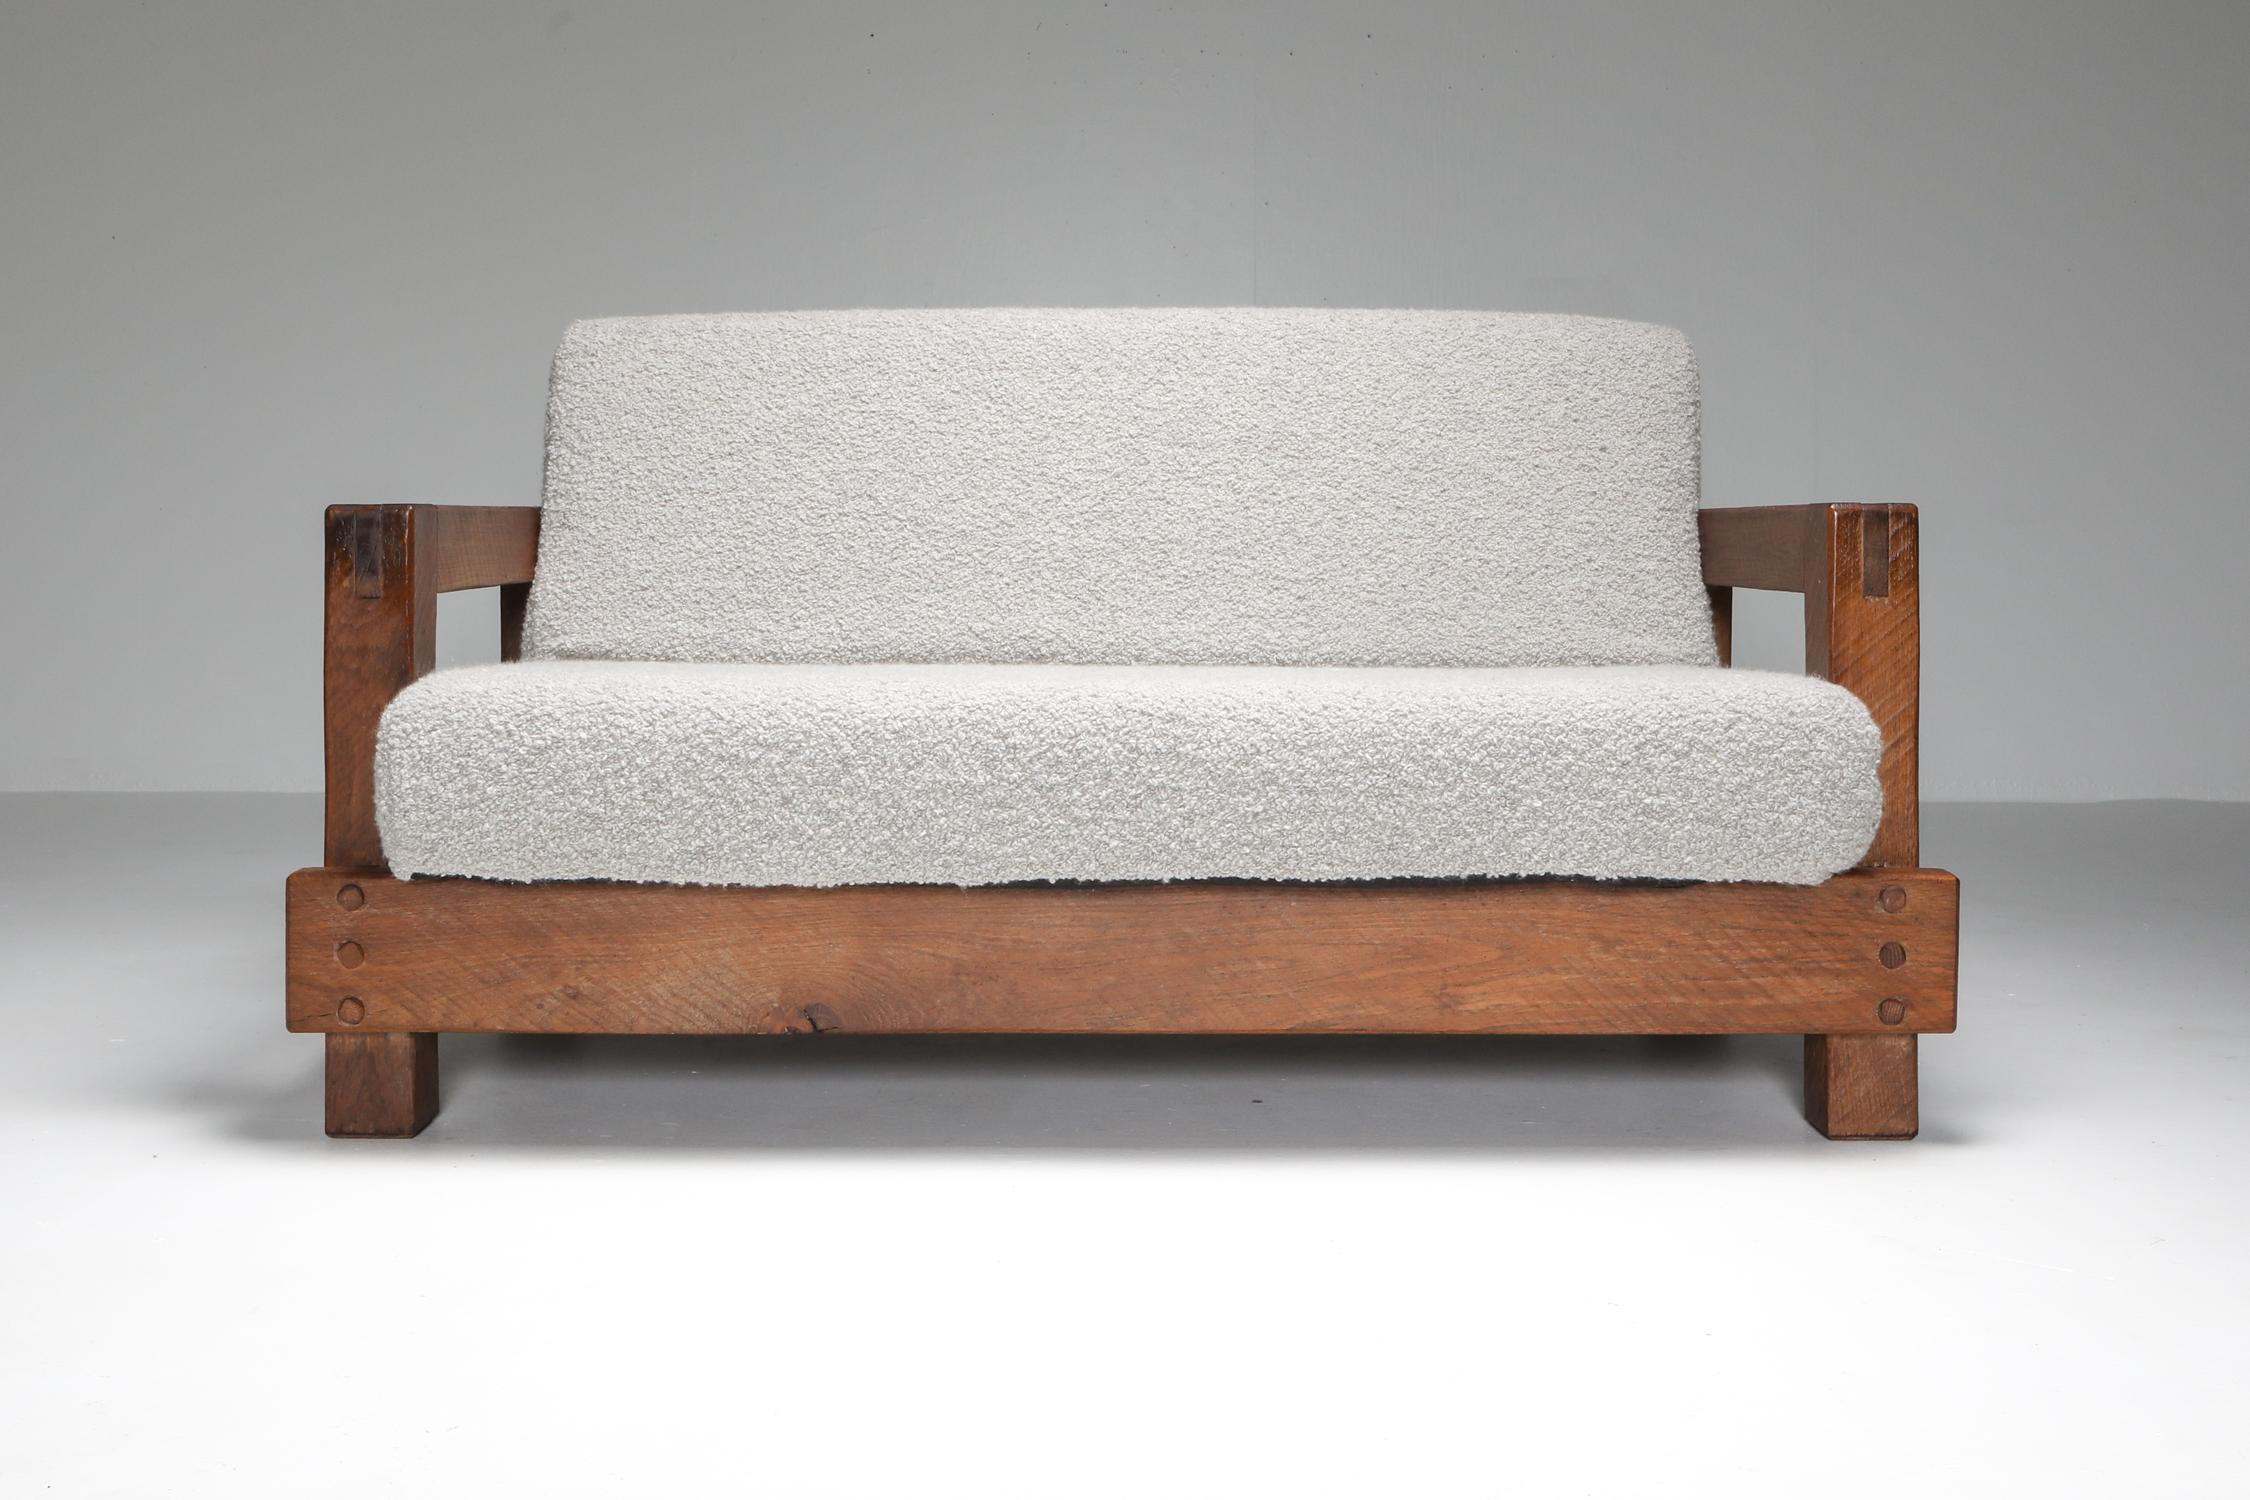 Rustic modern two-seat, bouclé wool, Pierre Frey

Chalet style wabi sabi loveseat sofa in solid oak
Would fit well in an Axel Vervoordt inspired decor.

   

   